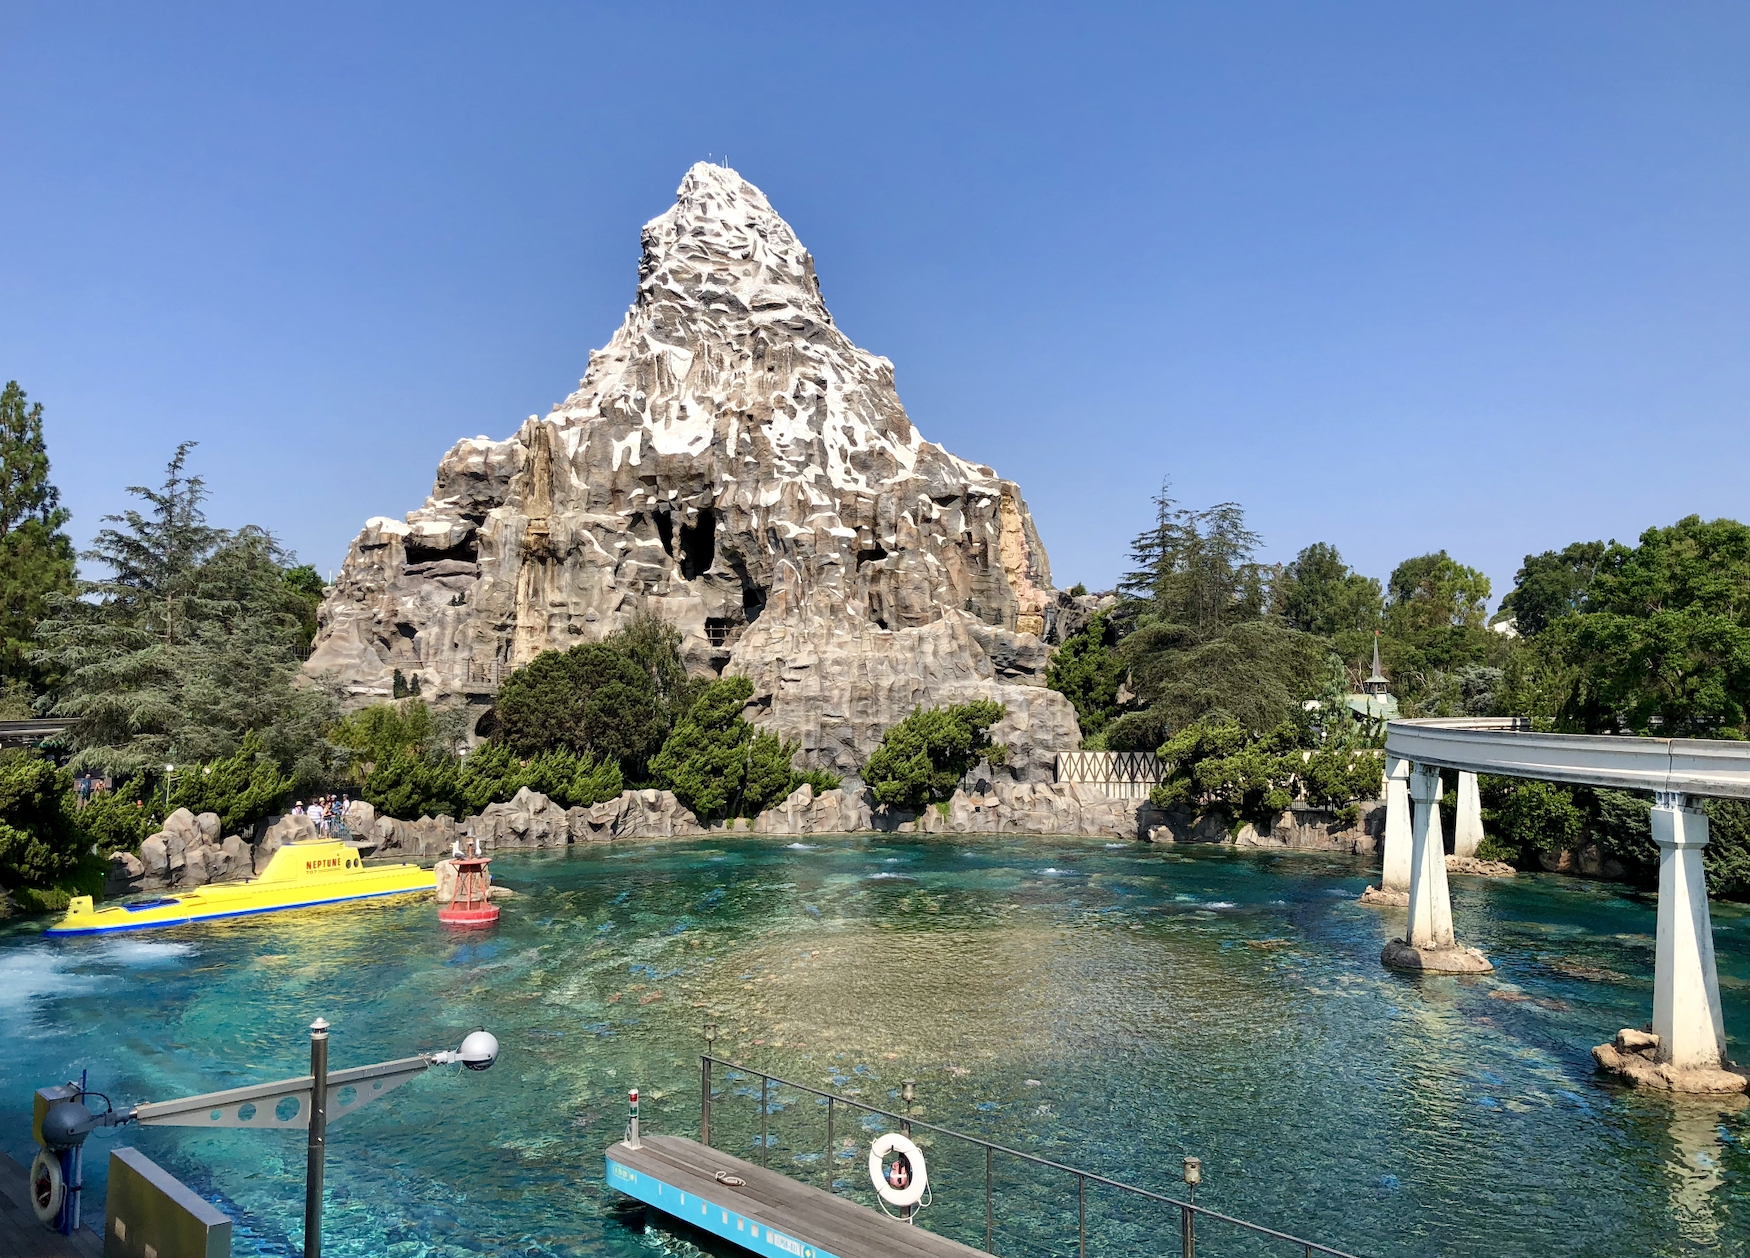 View of Matterhorn at Disneyland